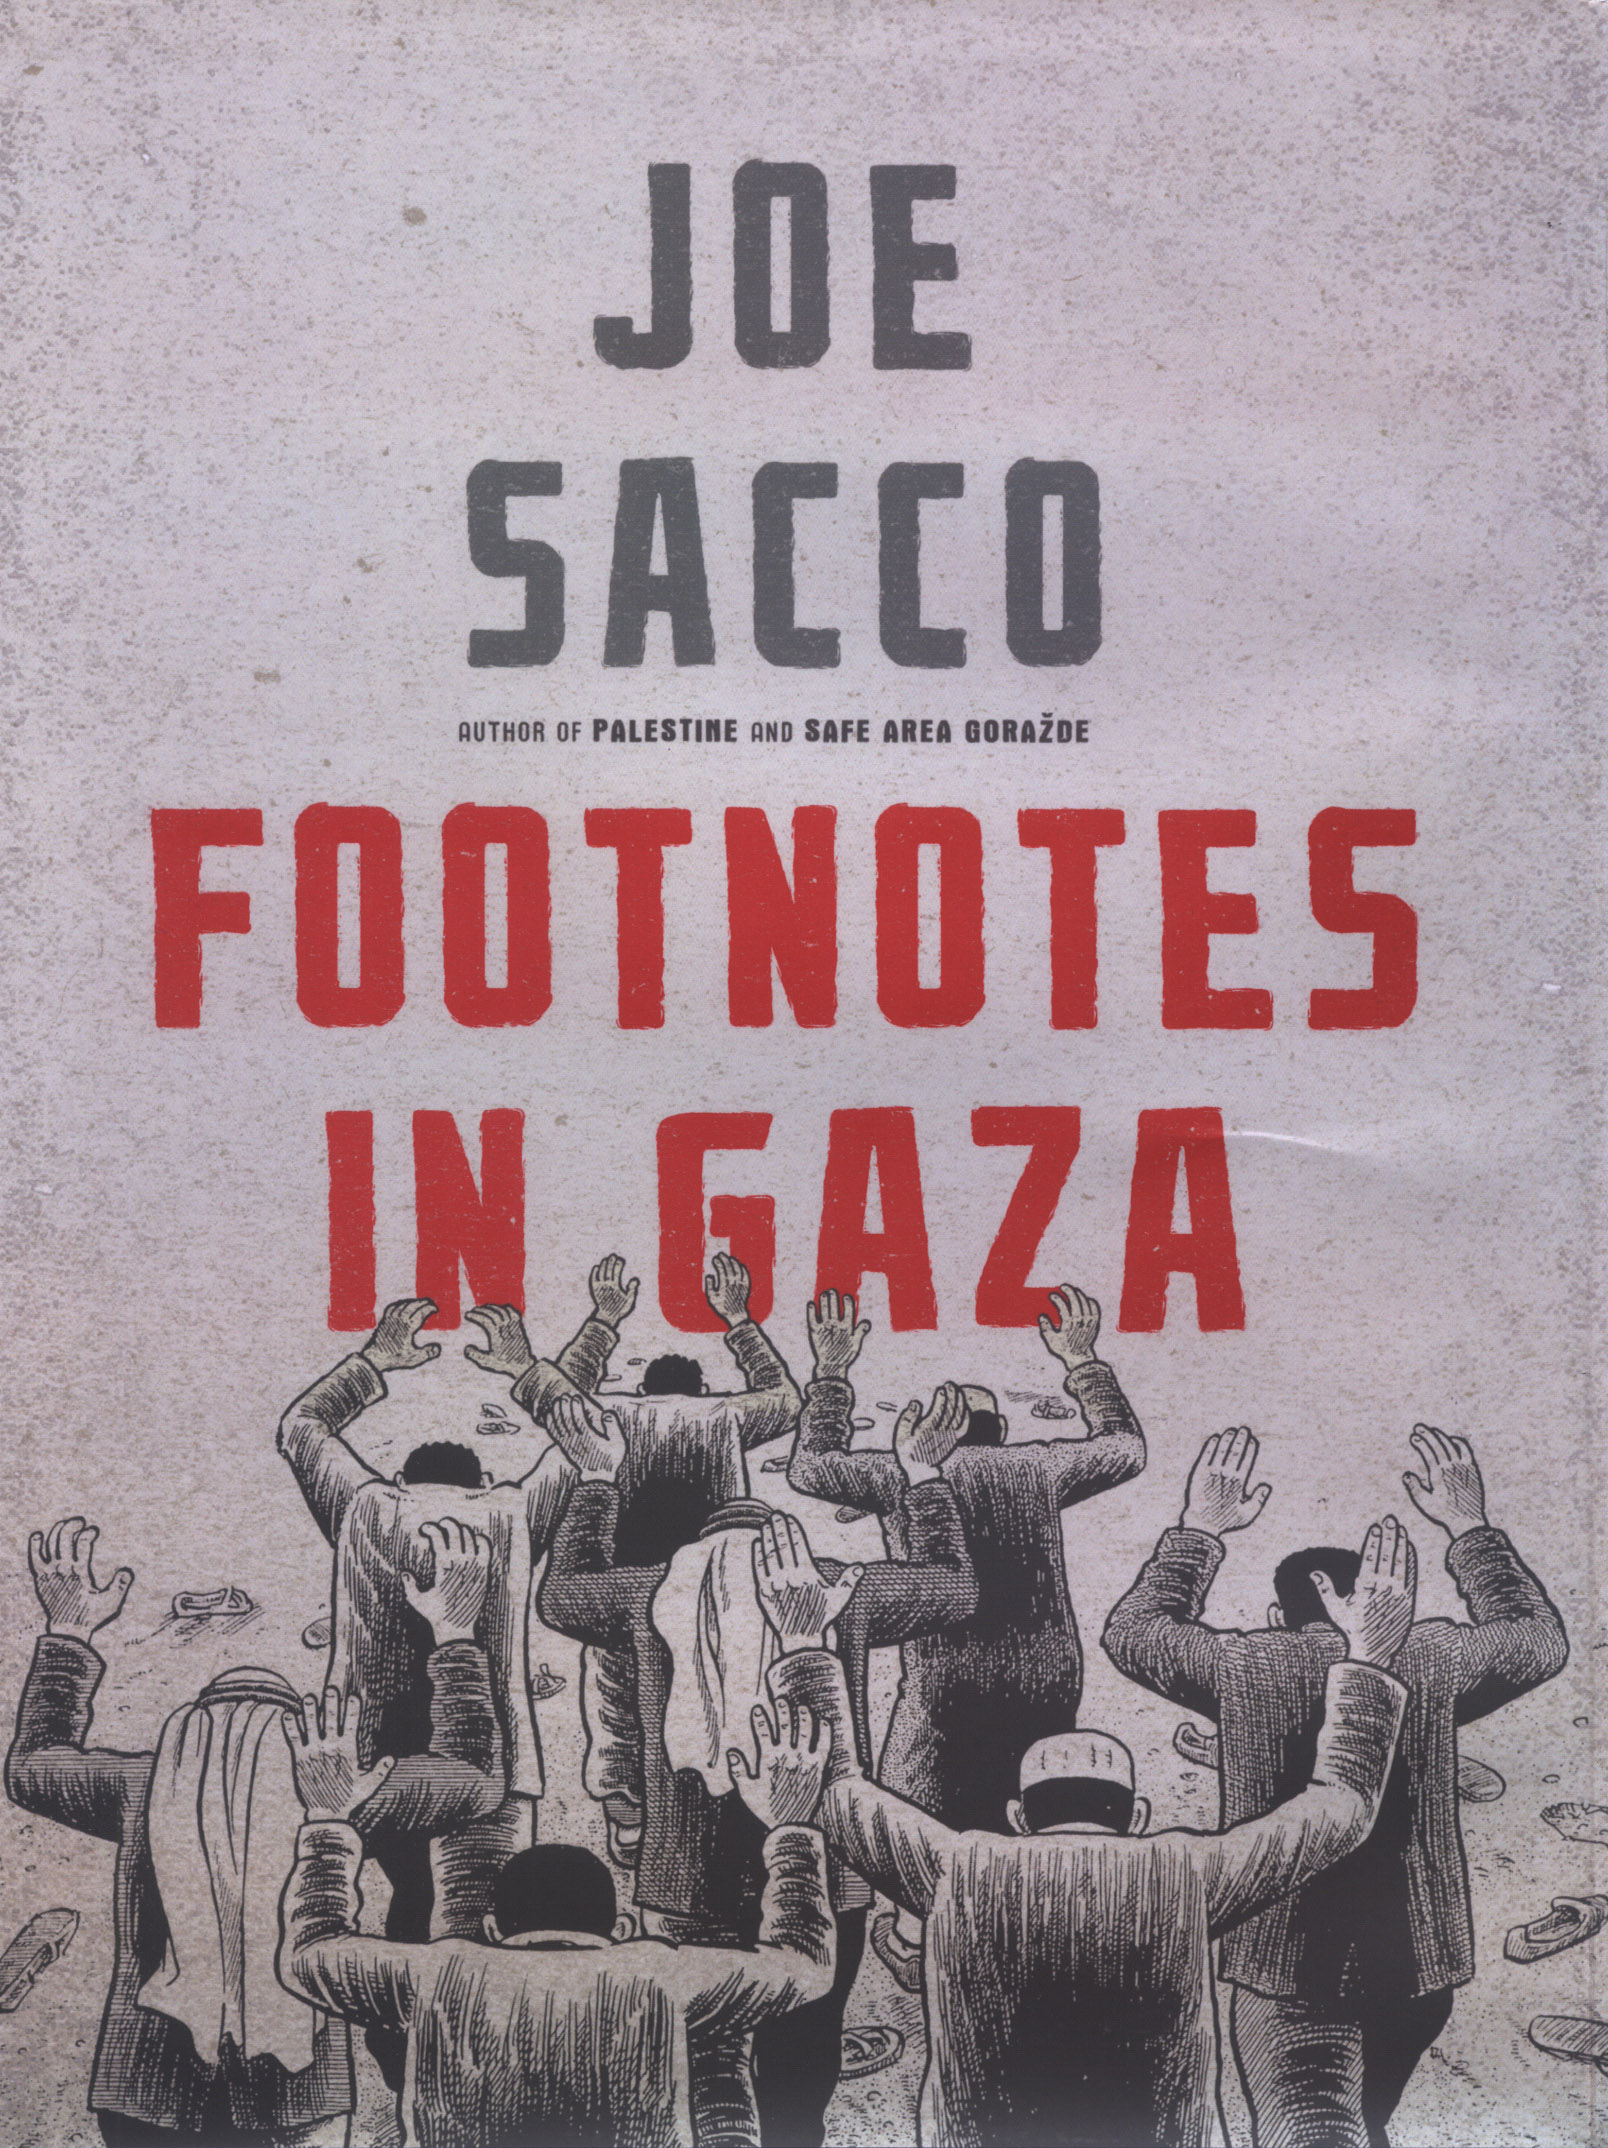 Joe Sacco: Footnotes in Gaza (Hardcover, 2008, Jonathan Cape)